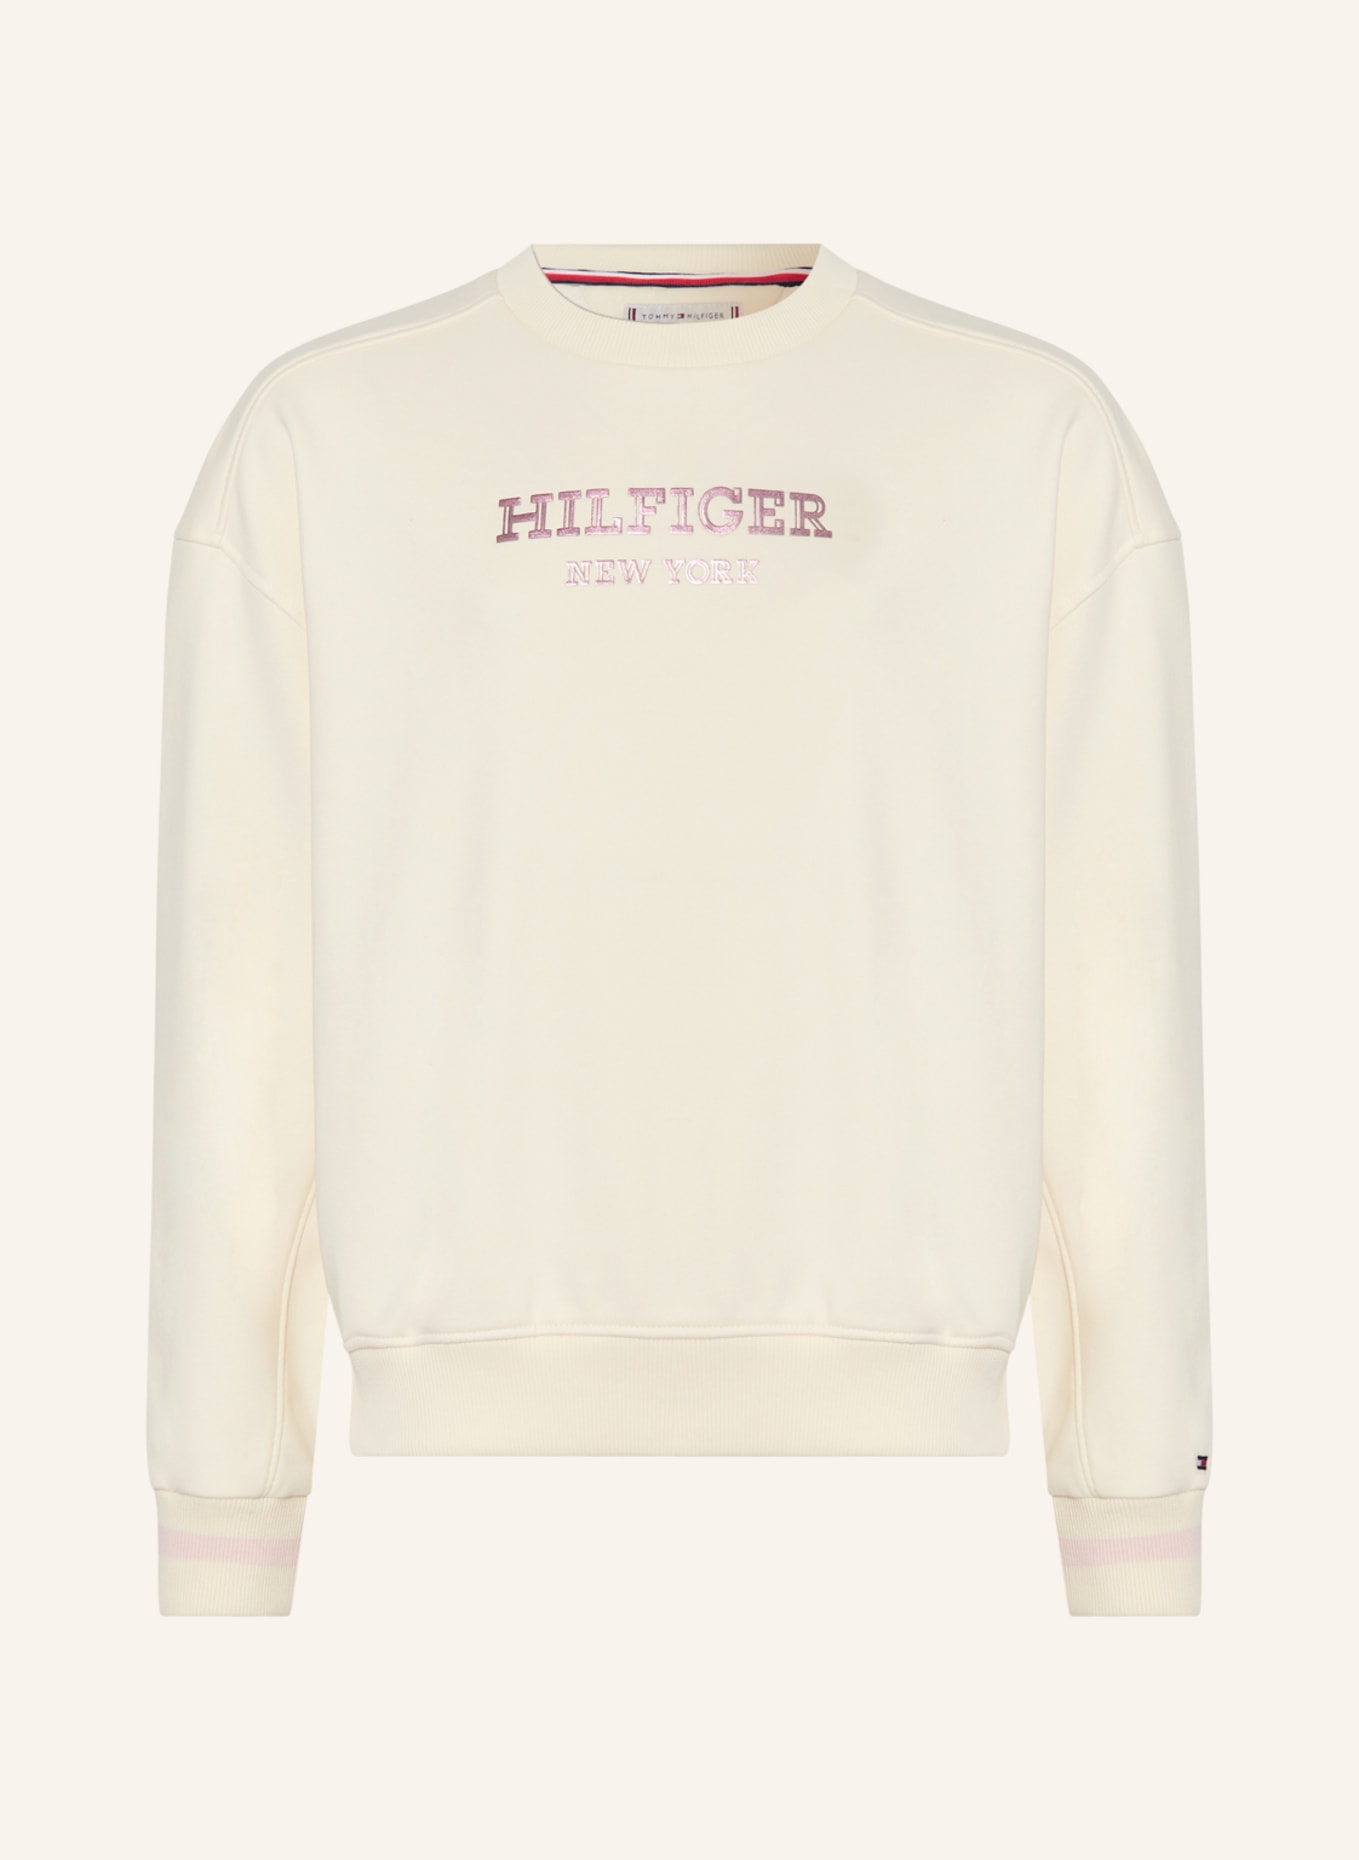 TOMMY HILFIGER Sweatshirt, Farbe: CREME/ LILA (Bild 1)